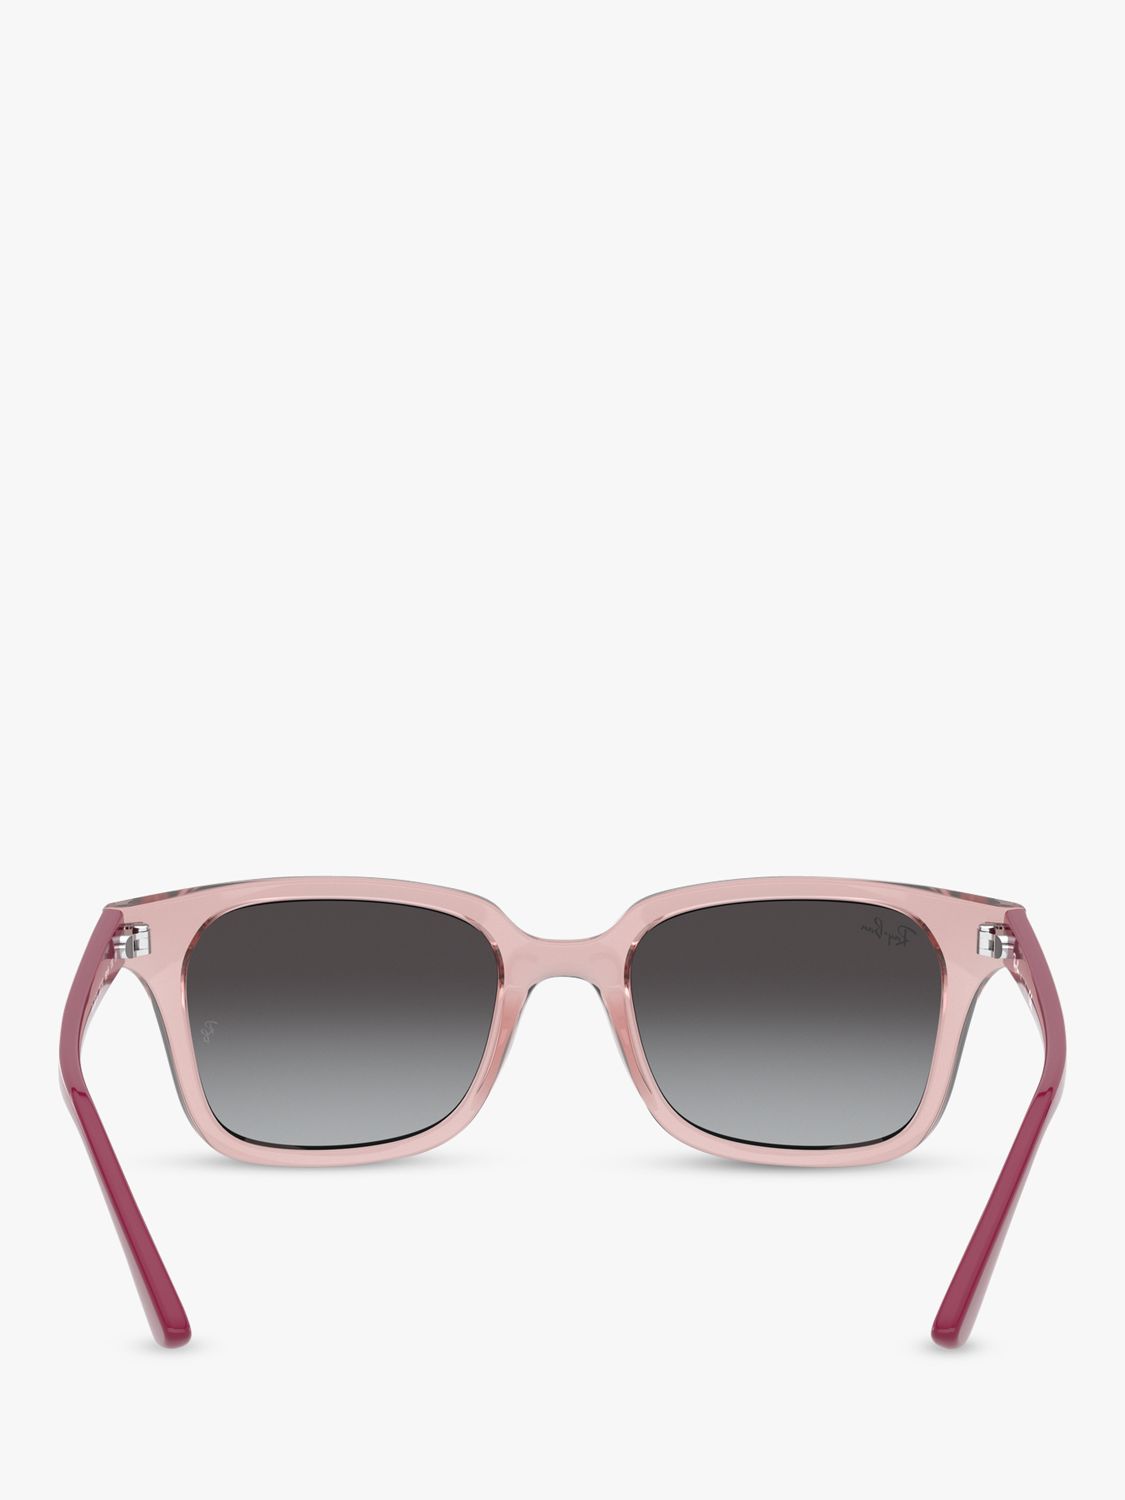 Ray-Ban Junior RJ9071S Unisex Square Sunglasses, Transparent Pink/Grey Gradient